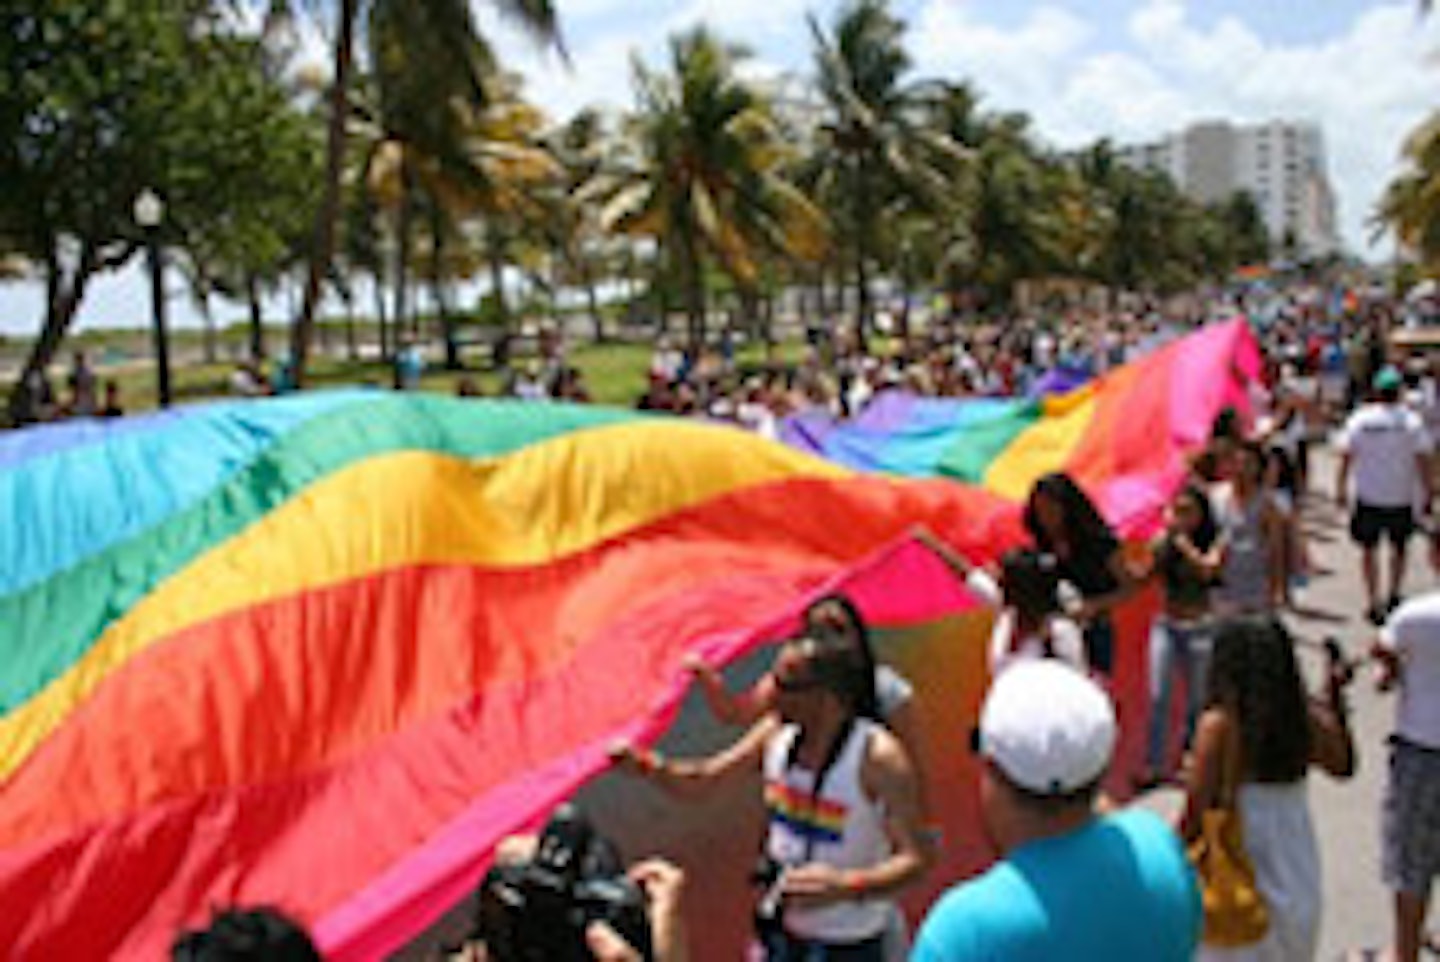 Miami Beach Mayor Initiates City's First Gay Pride Parade BizBash